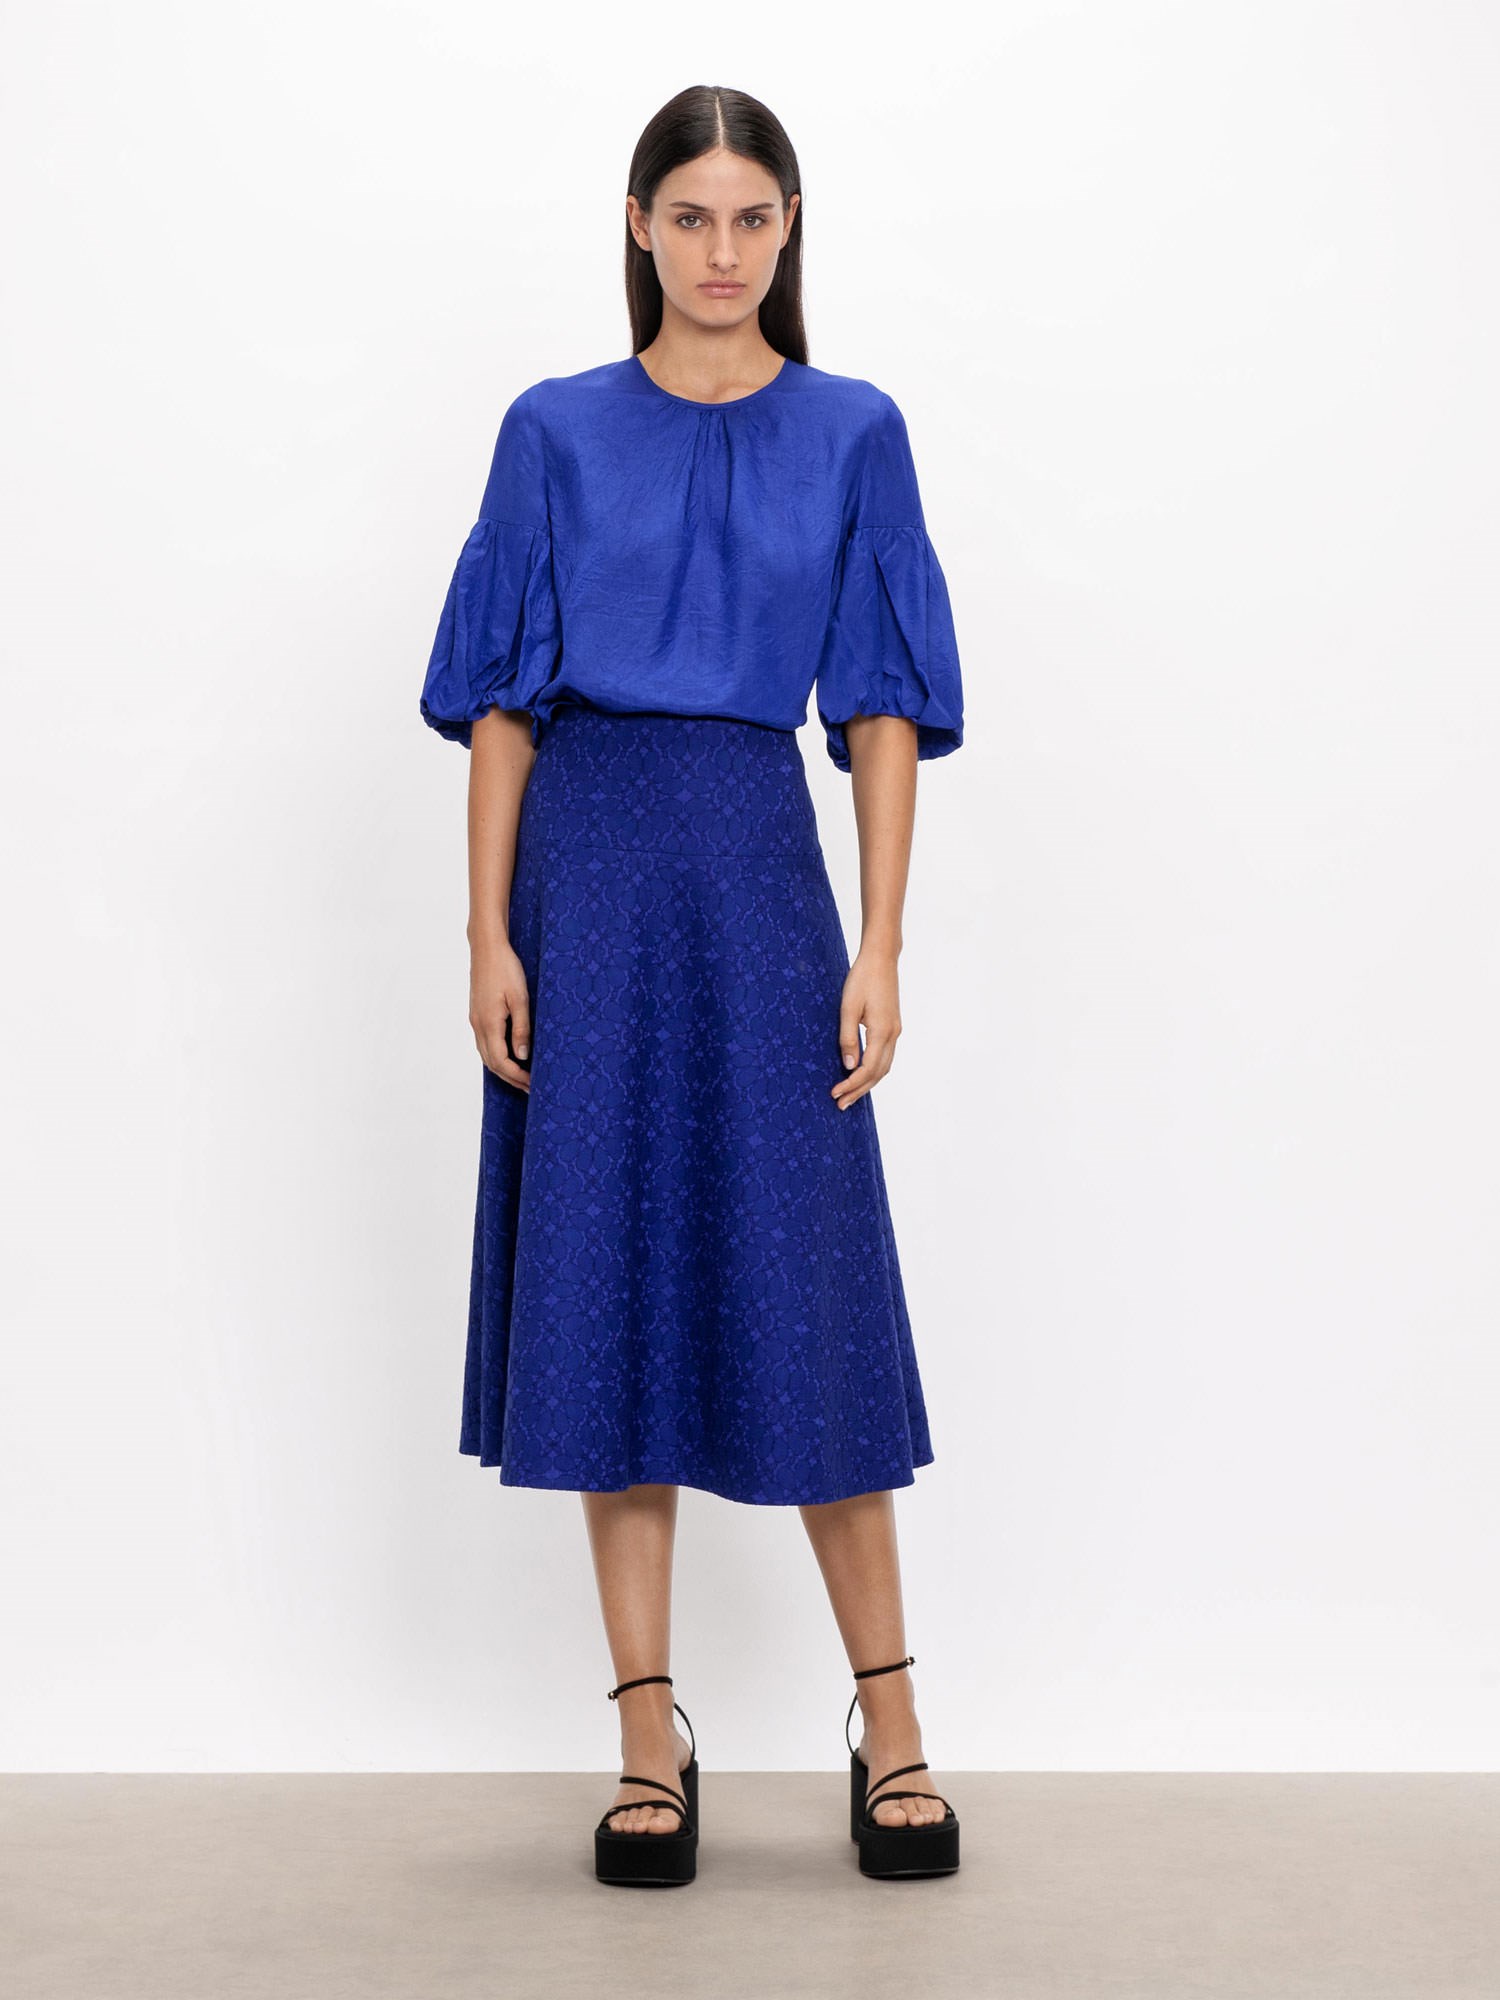 Bonded Lace Midi Skirt | Buy Skirts Online - Veronika Maine